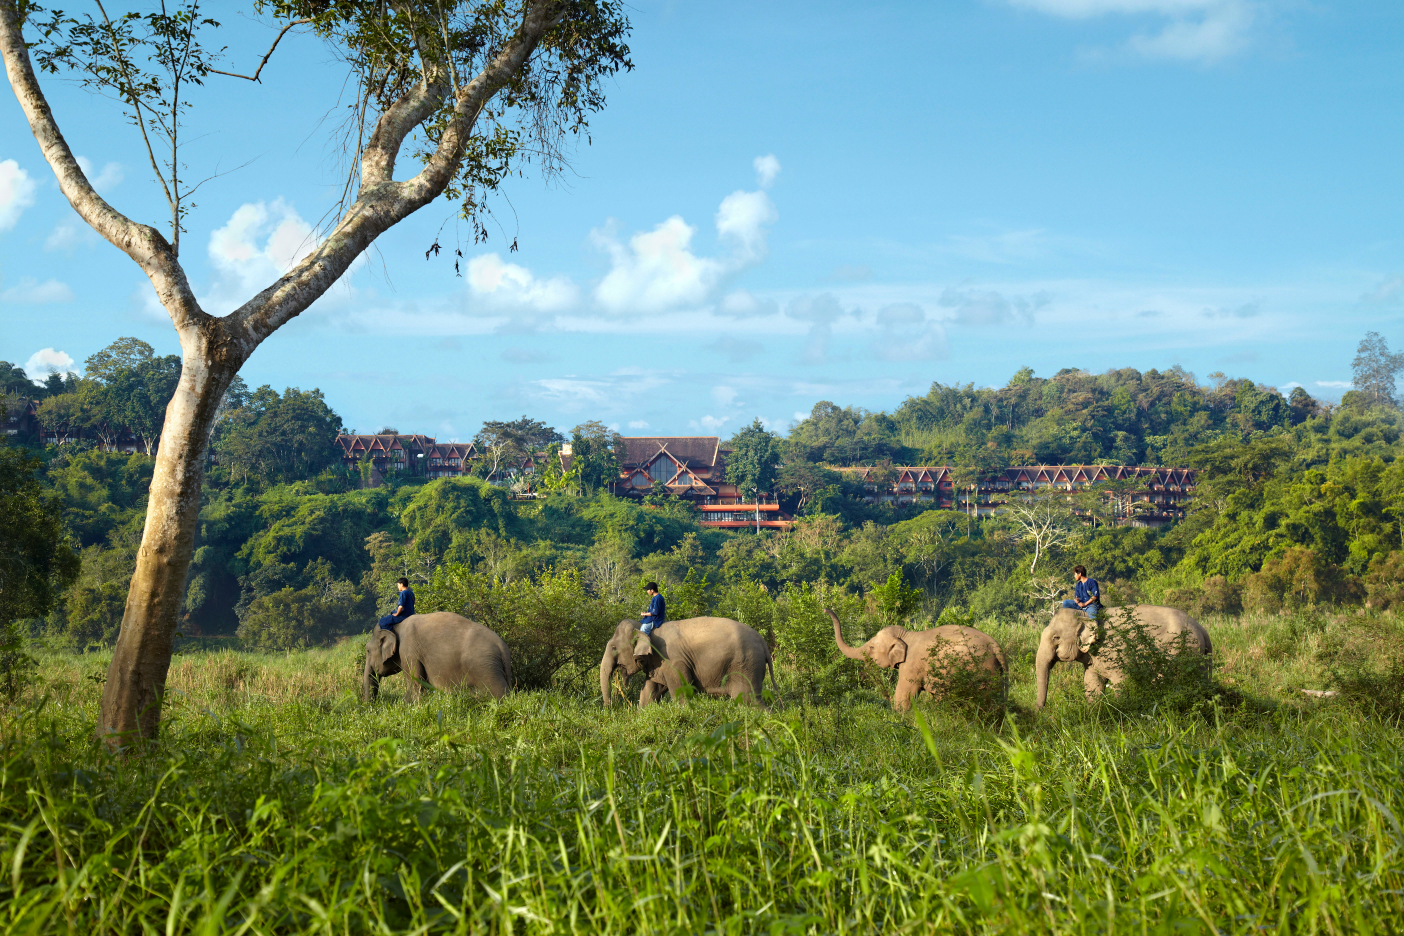 Exterior and Elephants at Anantara Golden Triangle Resort